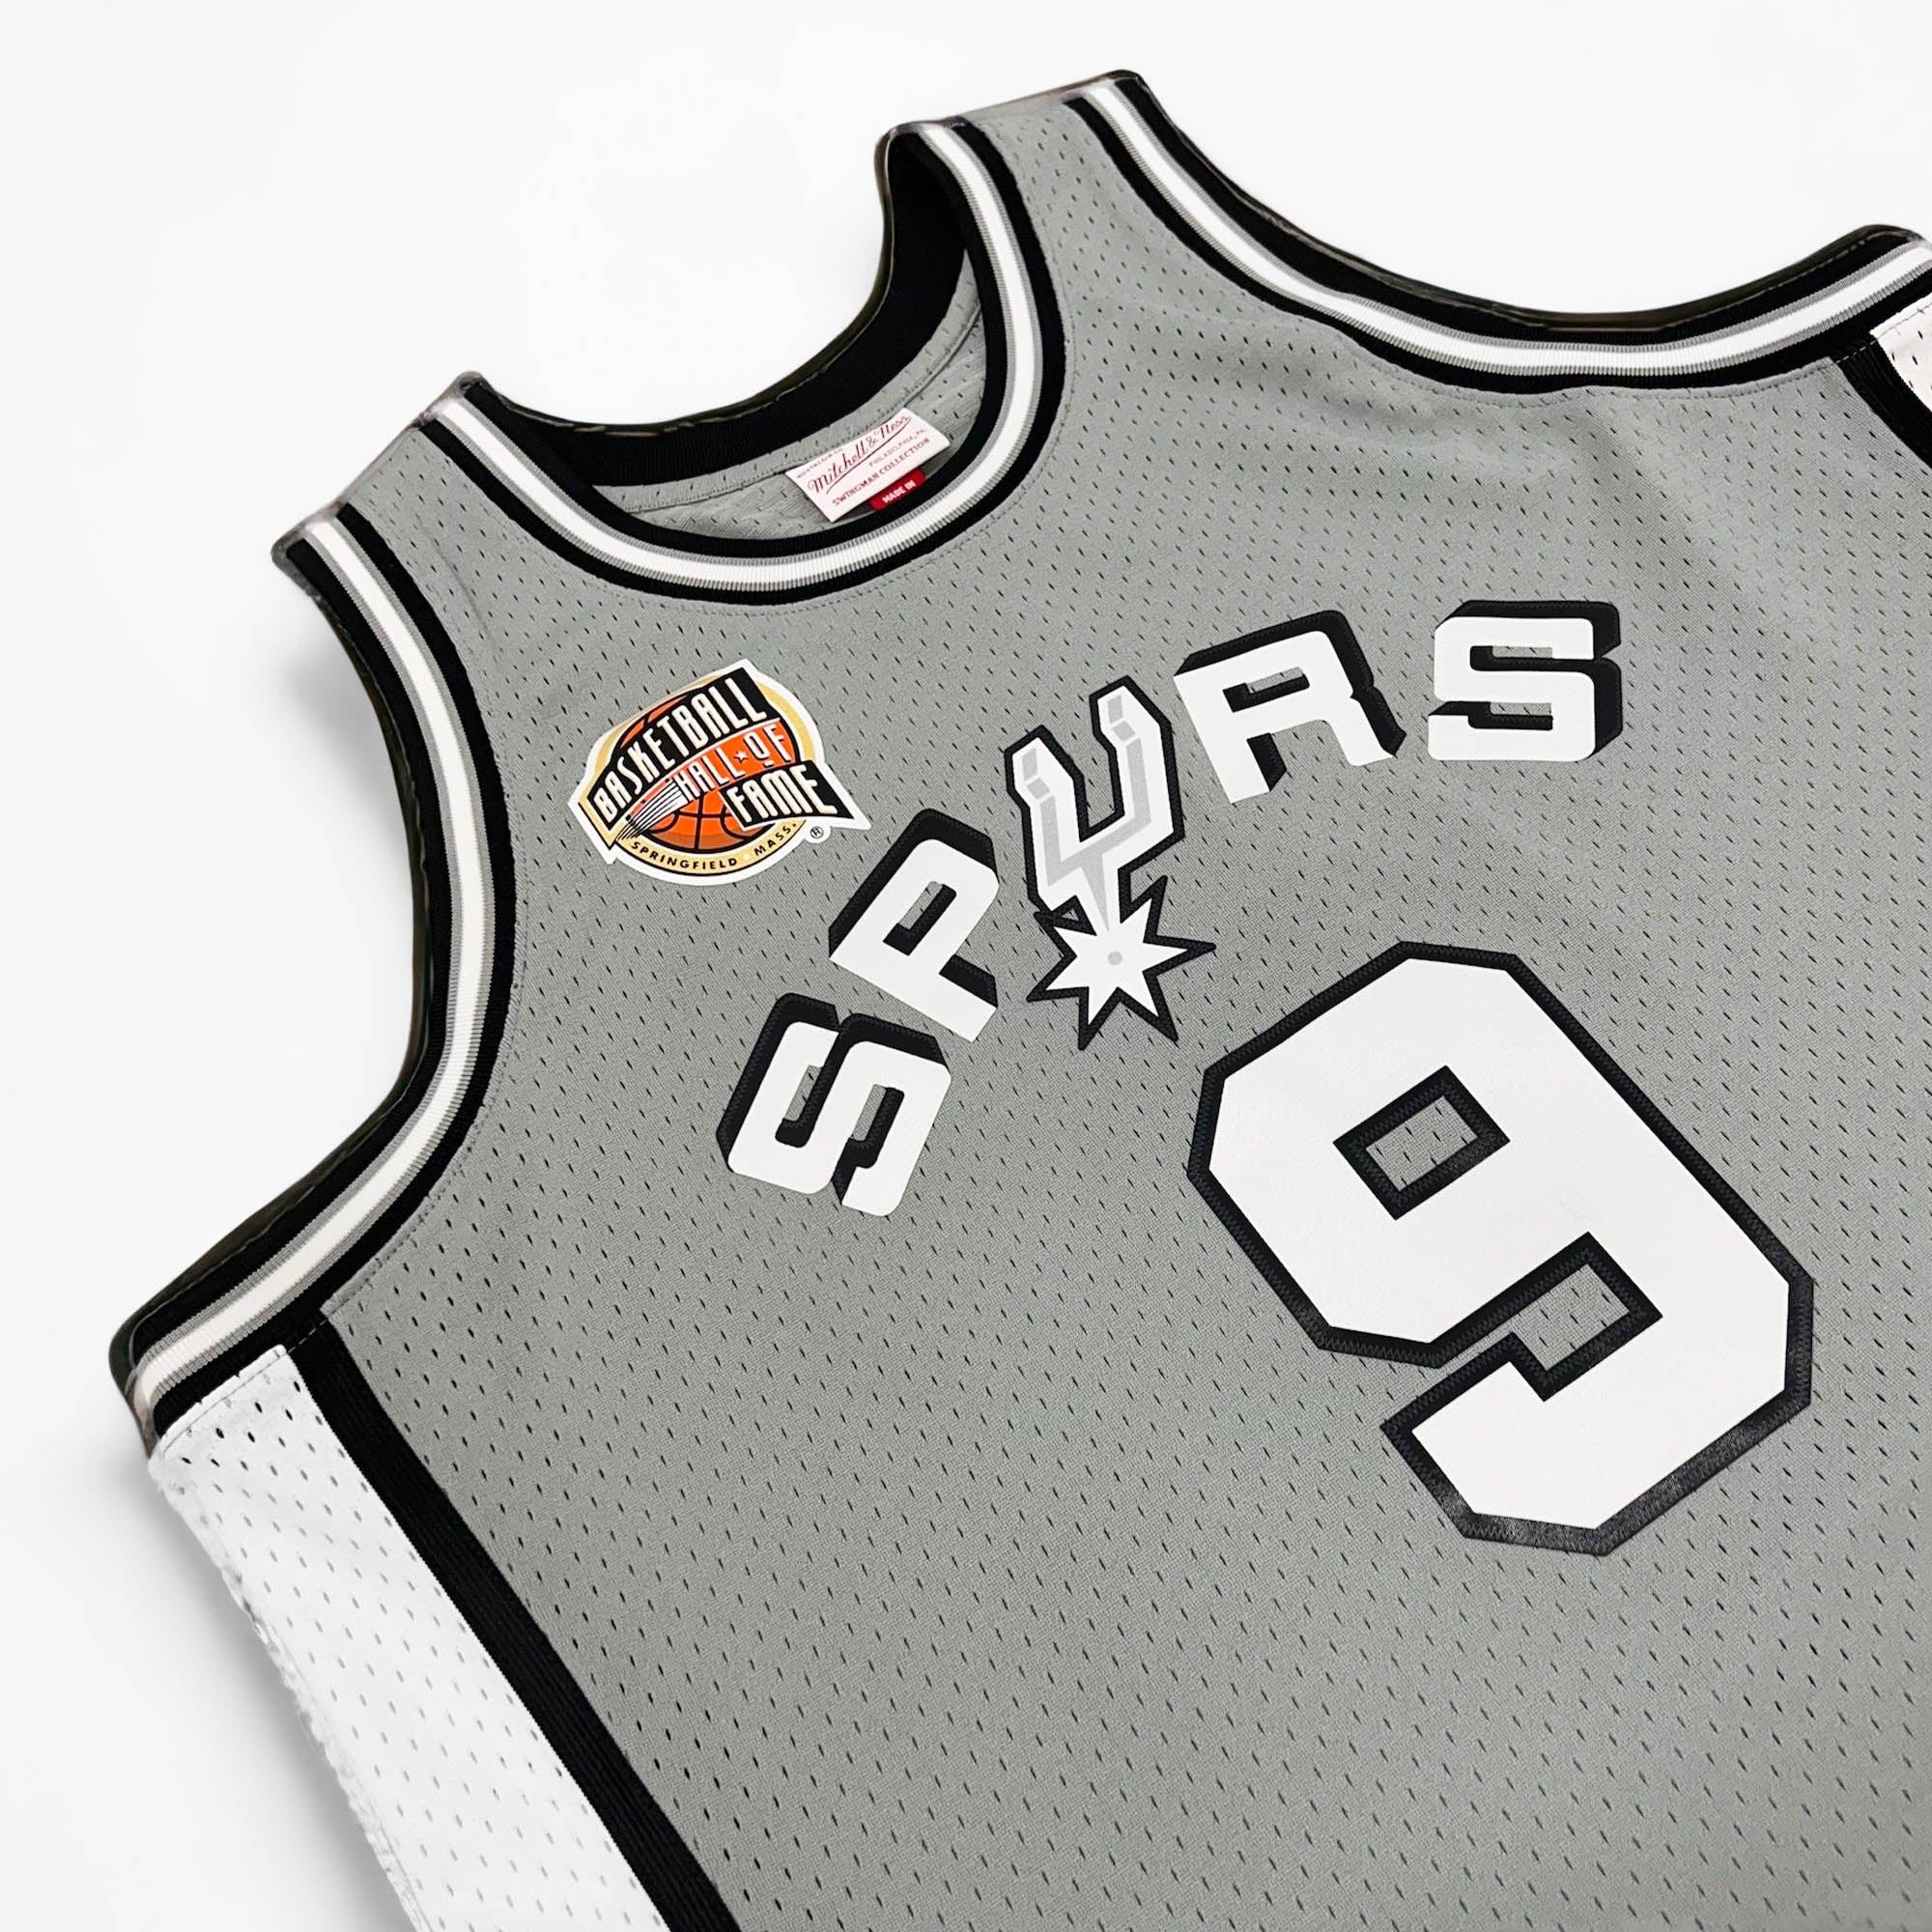 Buy Tony Parker's San Antonio Spurs jersey